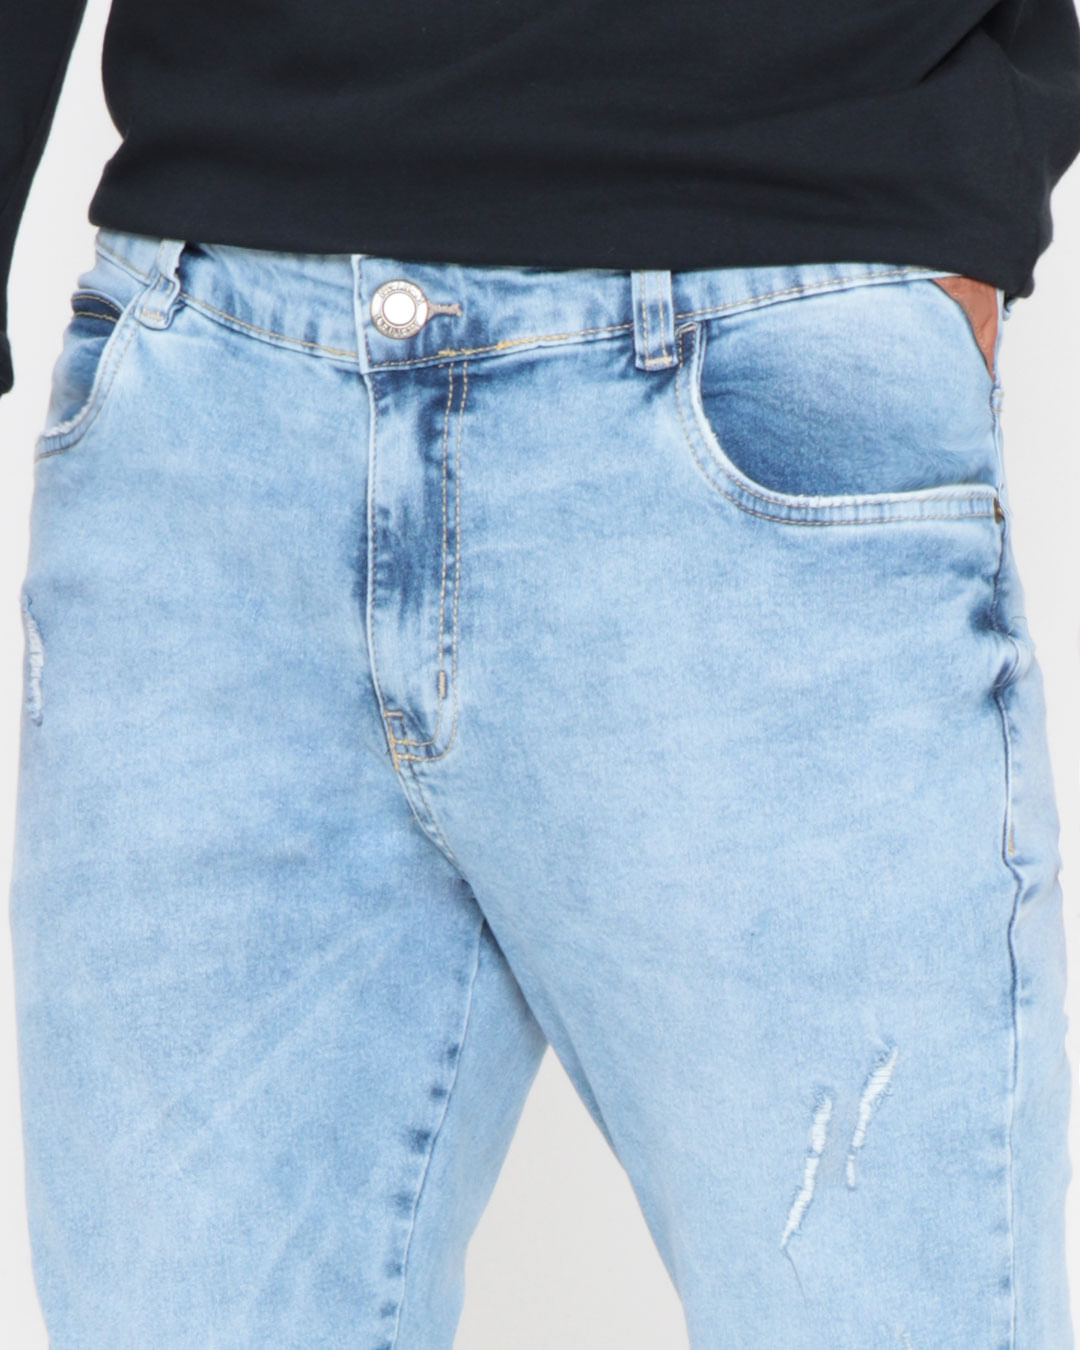 Calca-Jeans-Masculina-Skinny-Destroyed-Azul-Claro